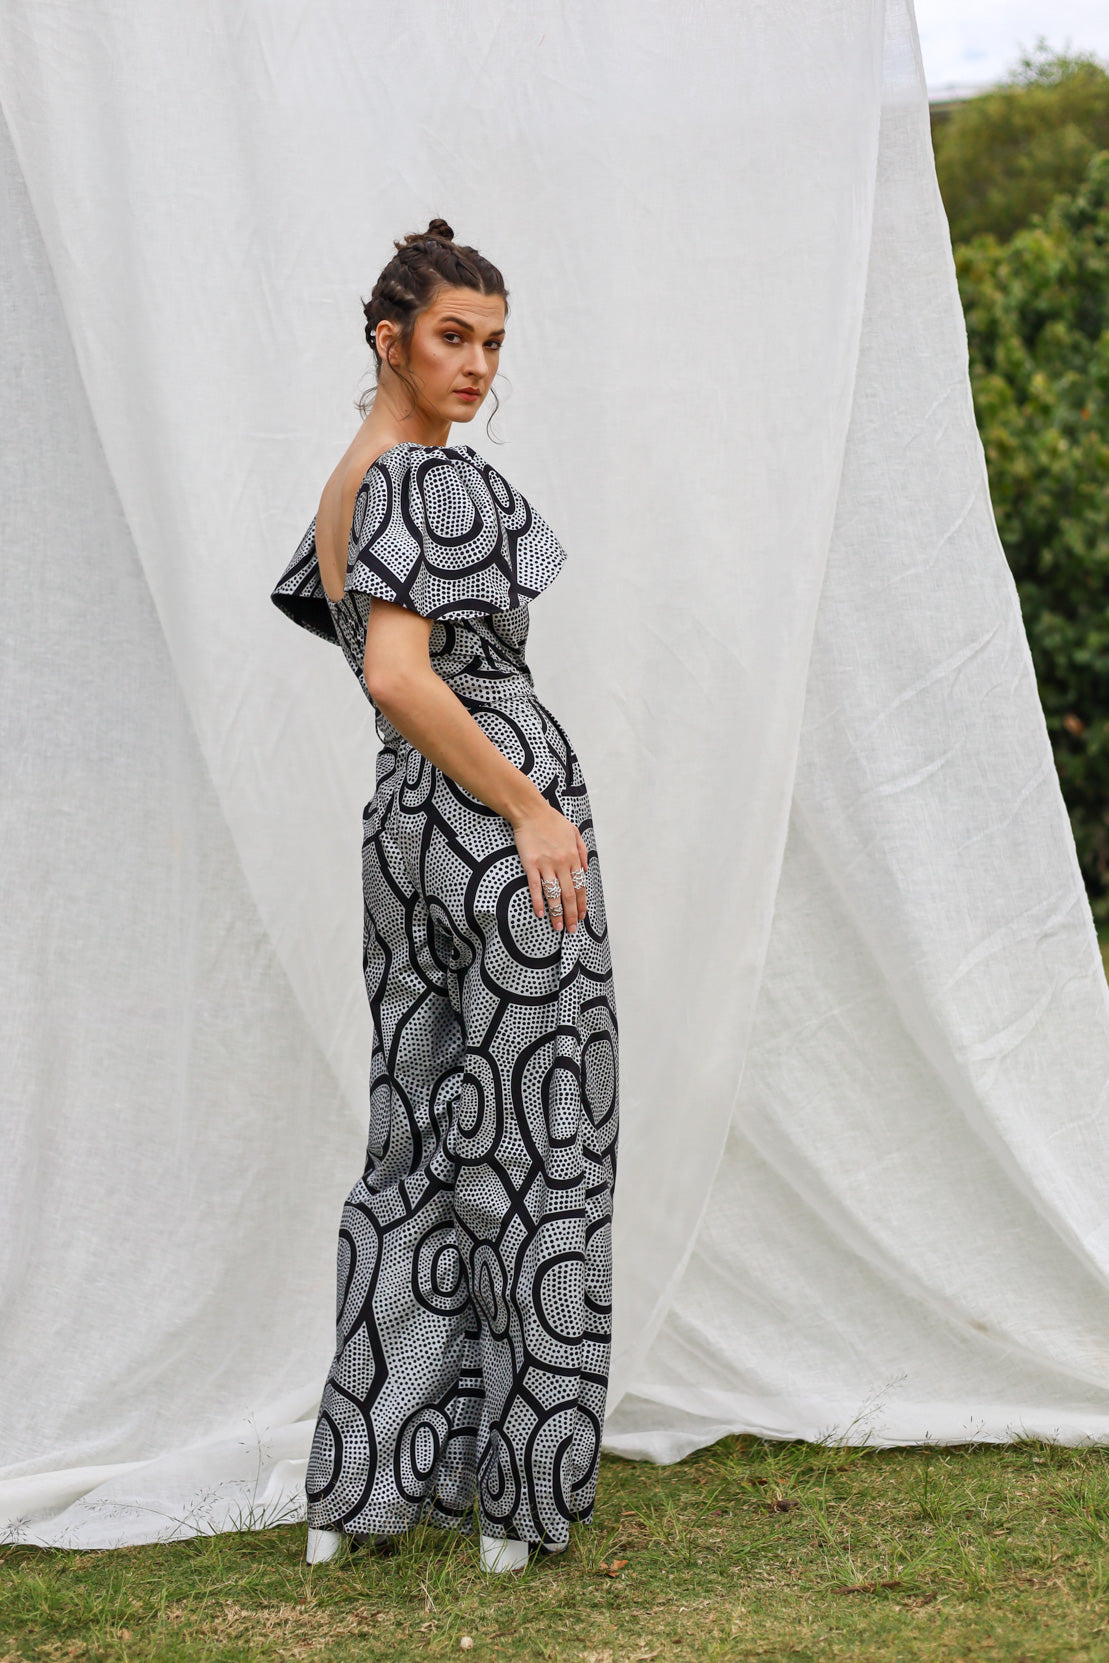 GLORY by Tiwi Design x Ossom Jilamara Nola Playsuit in Lightweight Cotton